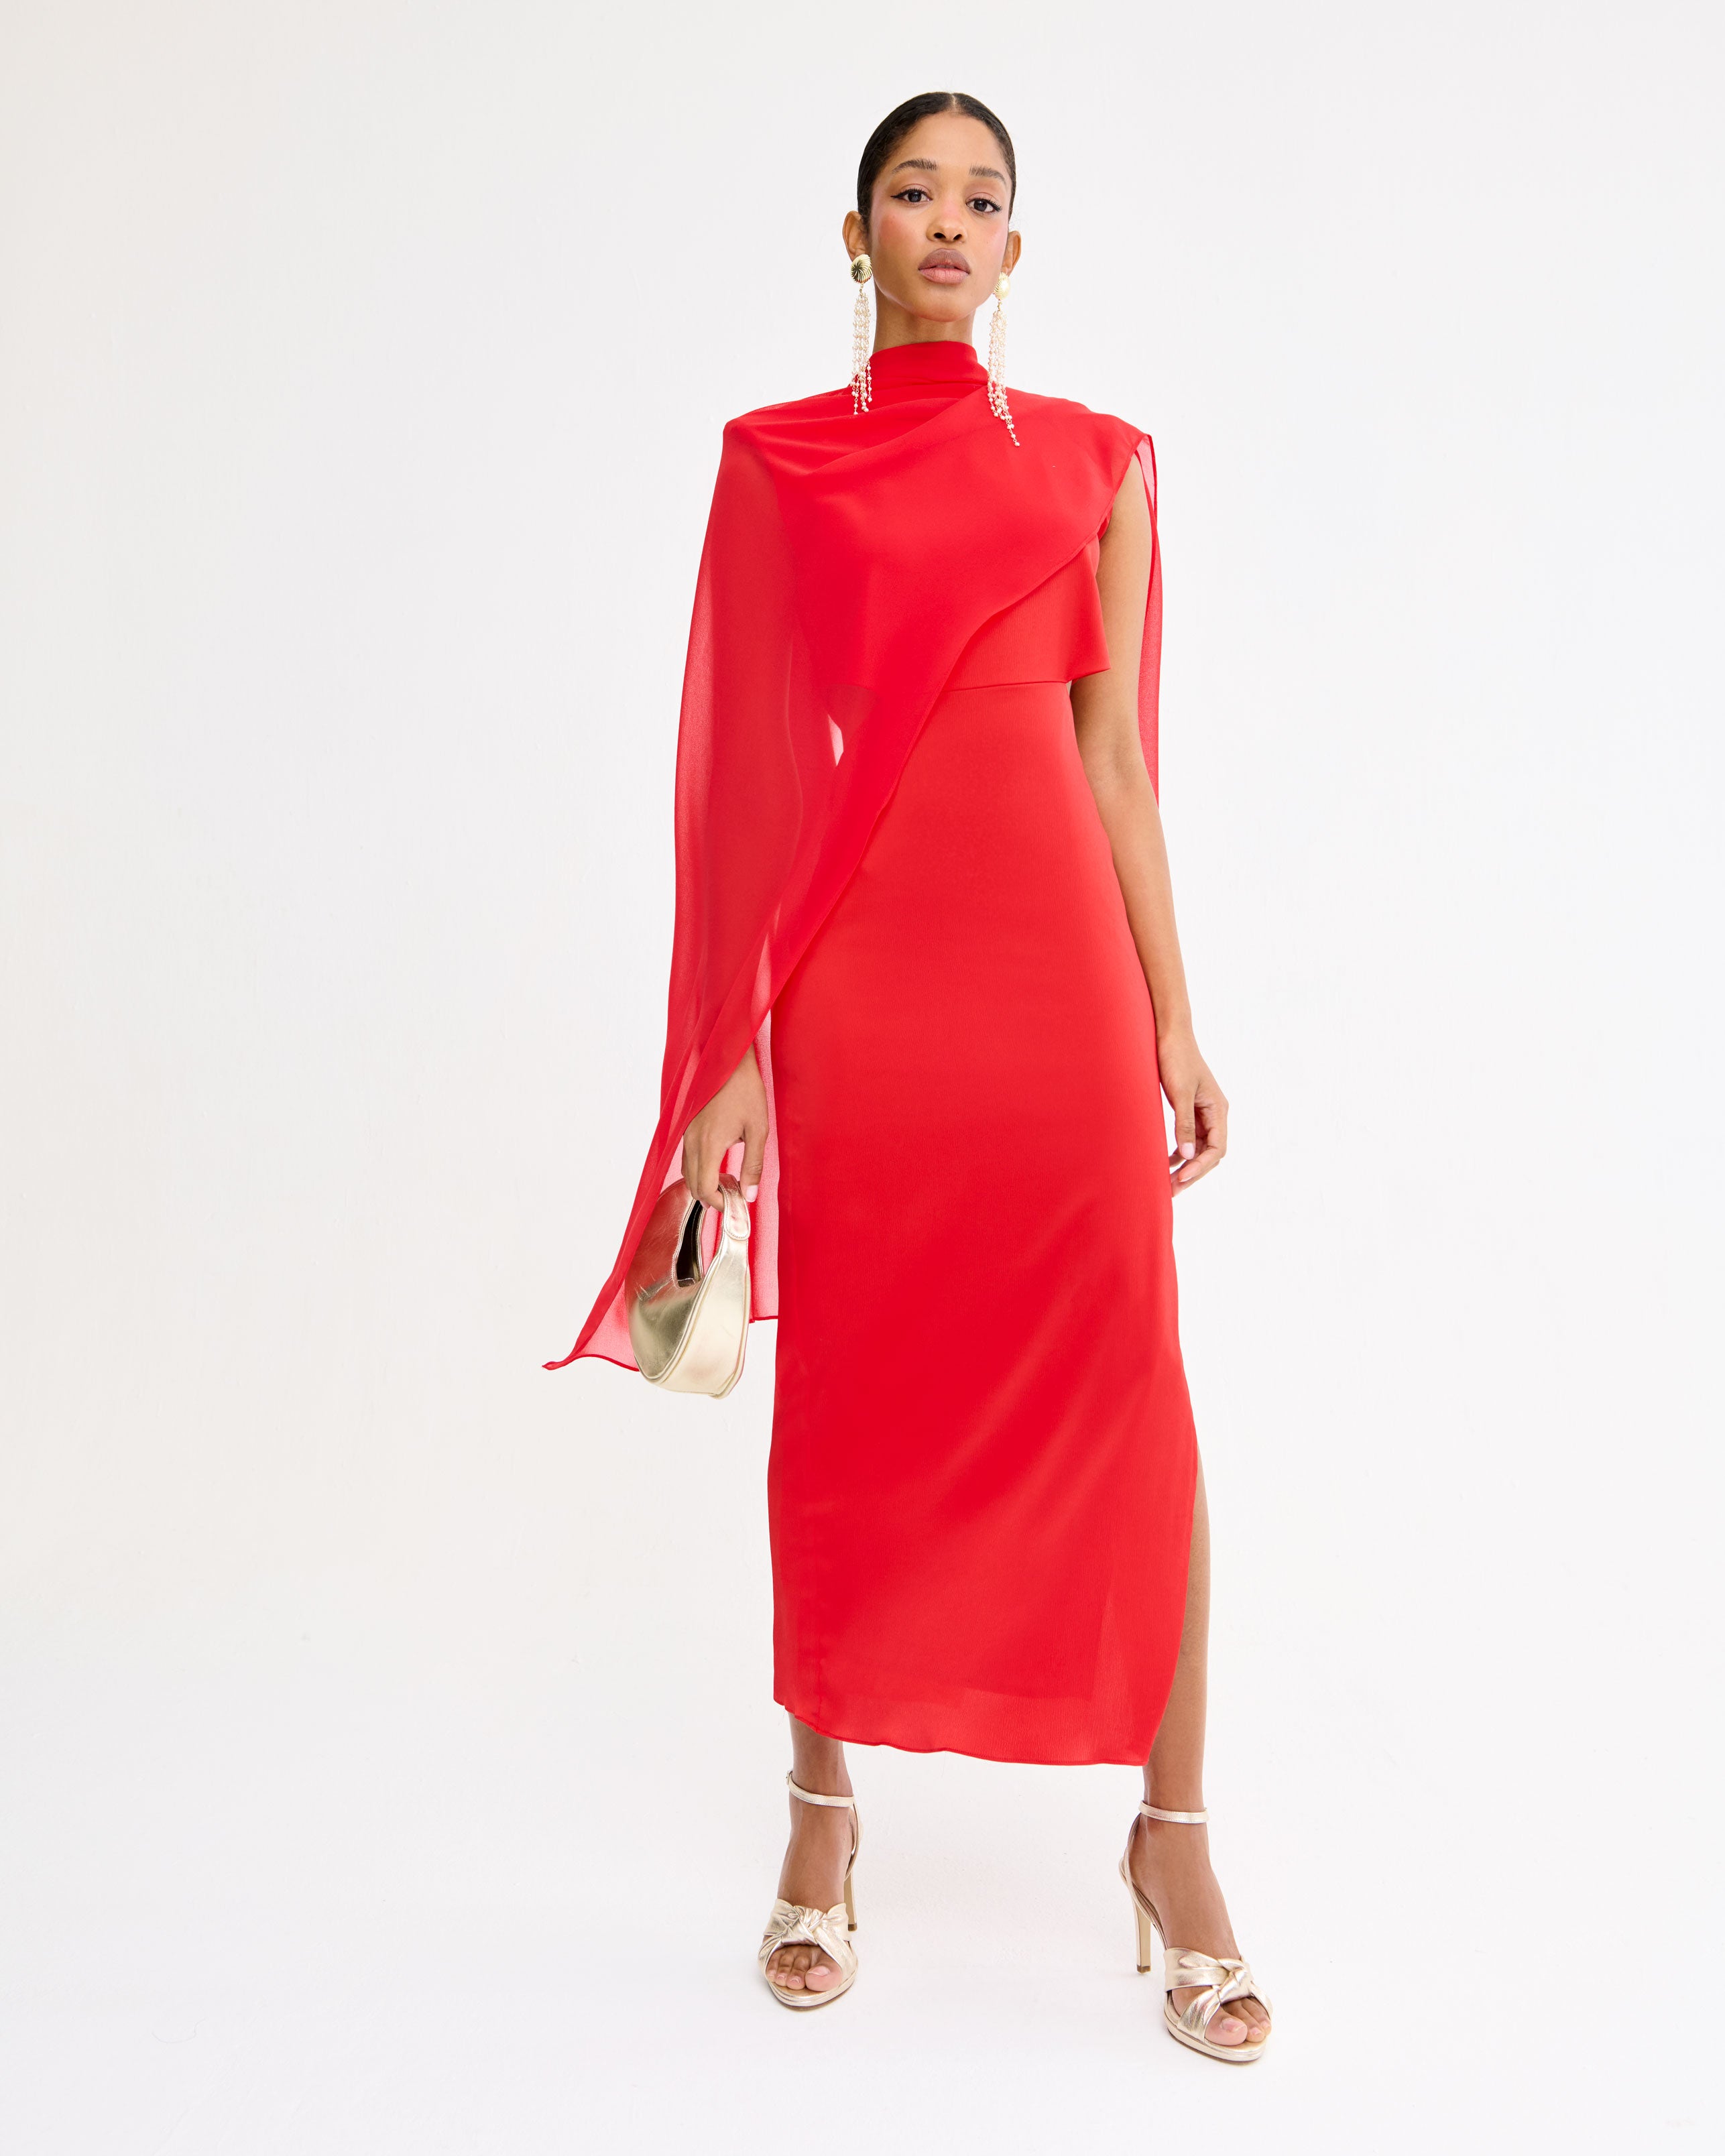 Nazaré Red Dress